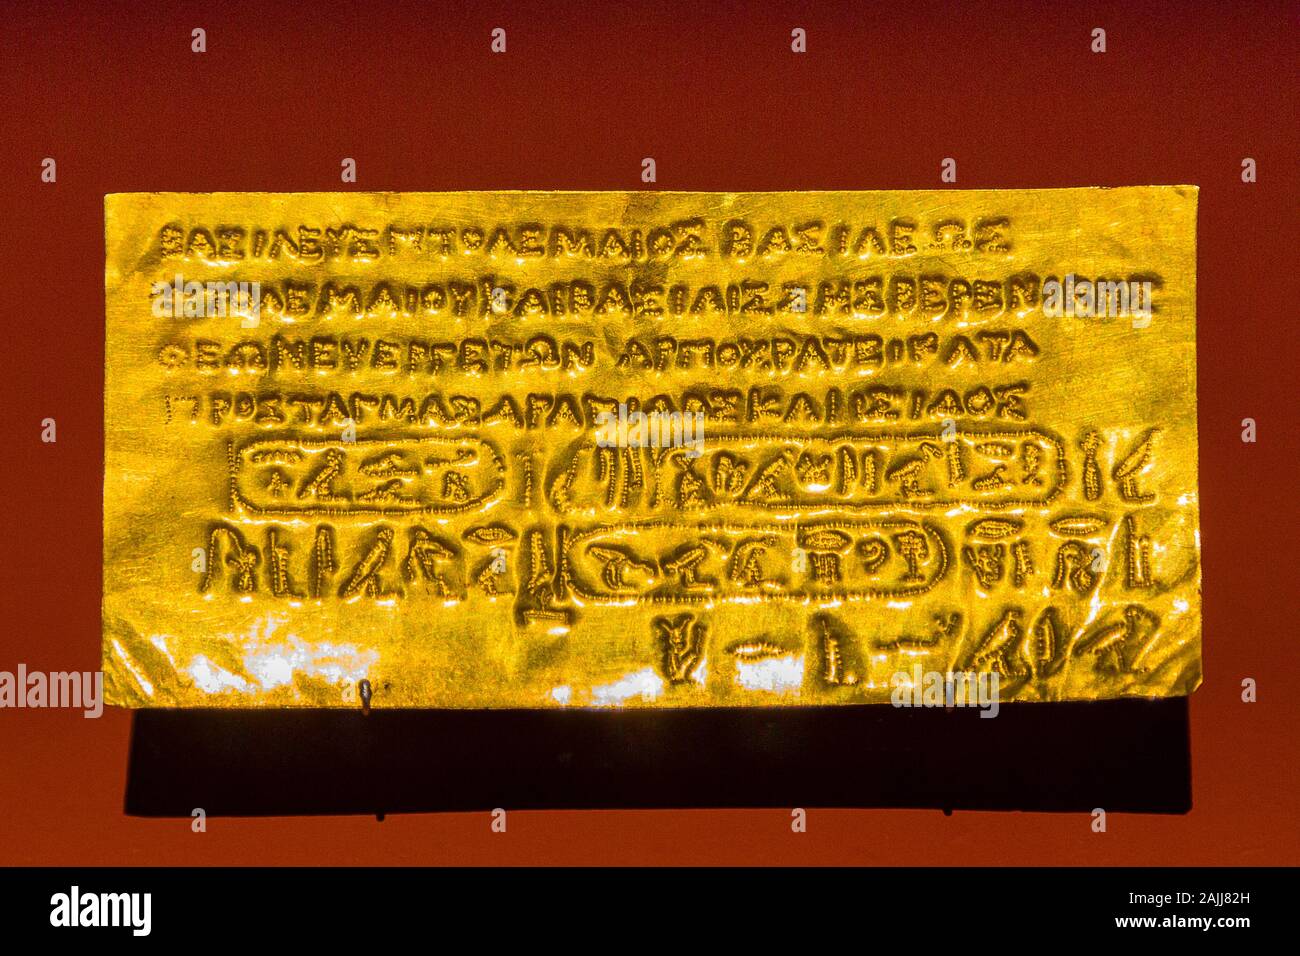 Photo taken during the opening visit of the exhibition “Osiris, Egypt's Sunken Mysteries”. Egypt, Alexandria, Graeco-Roman museum, foundation plaque. Stock Photo